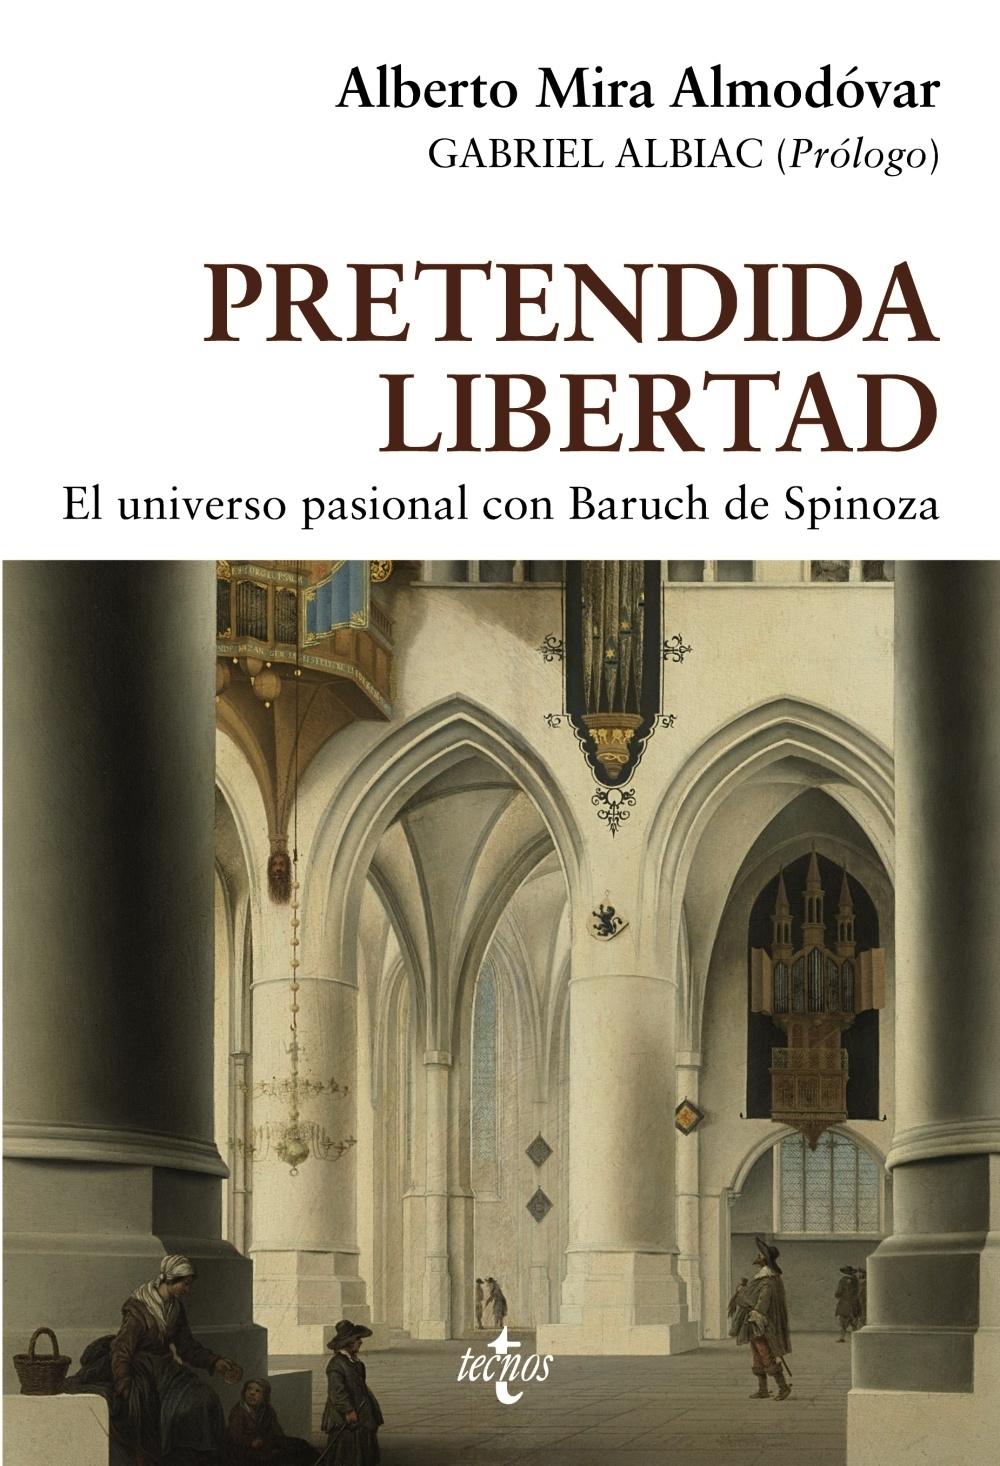 Pretendida Libertad "El Universo Pasional con Baruch de Spinoza"